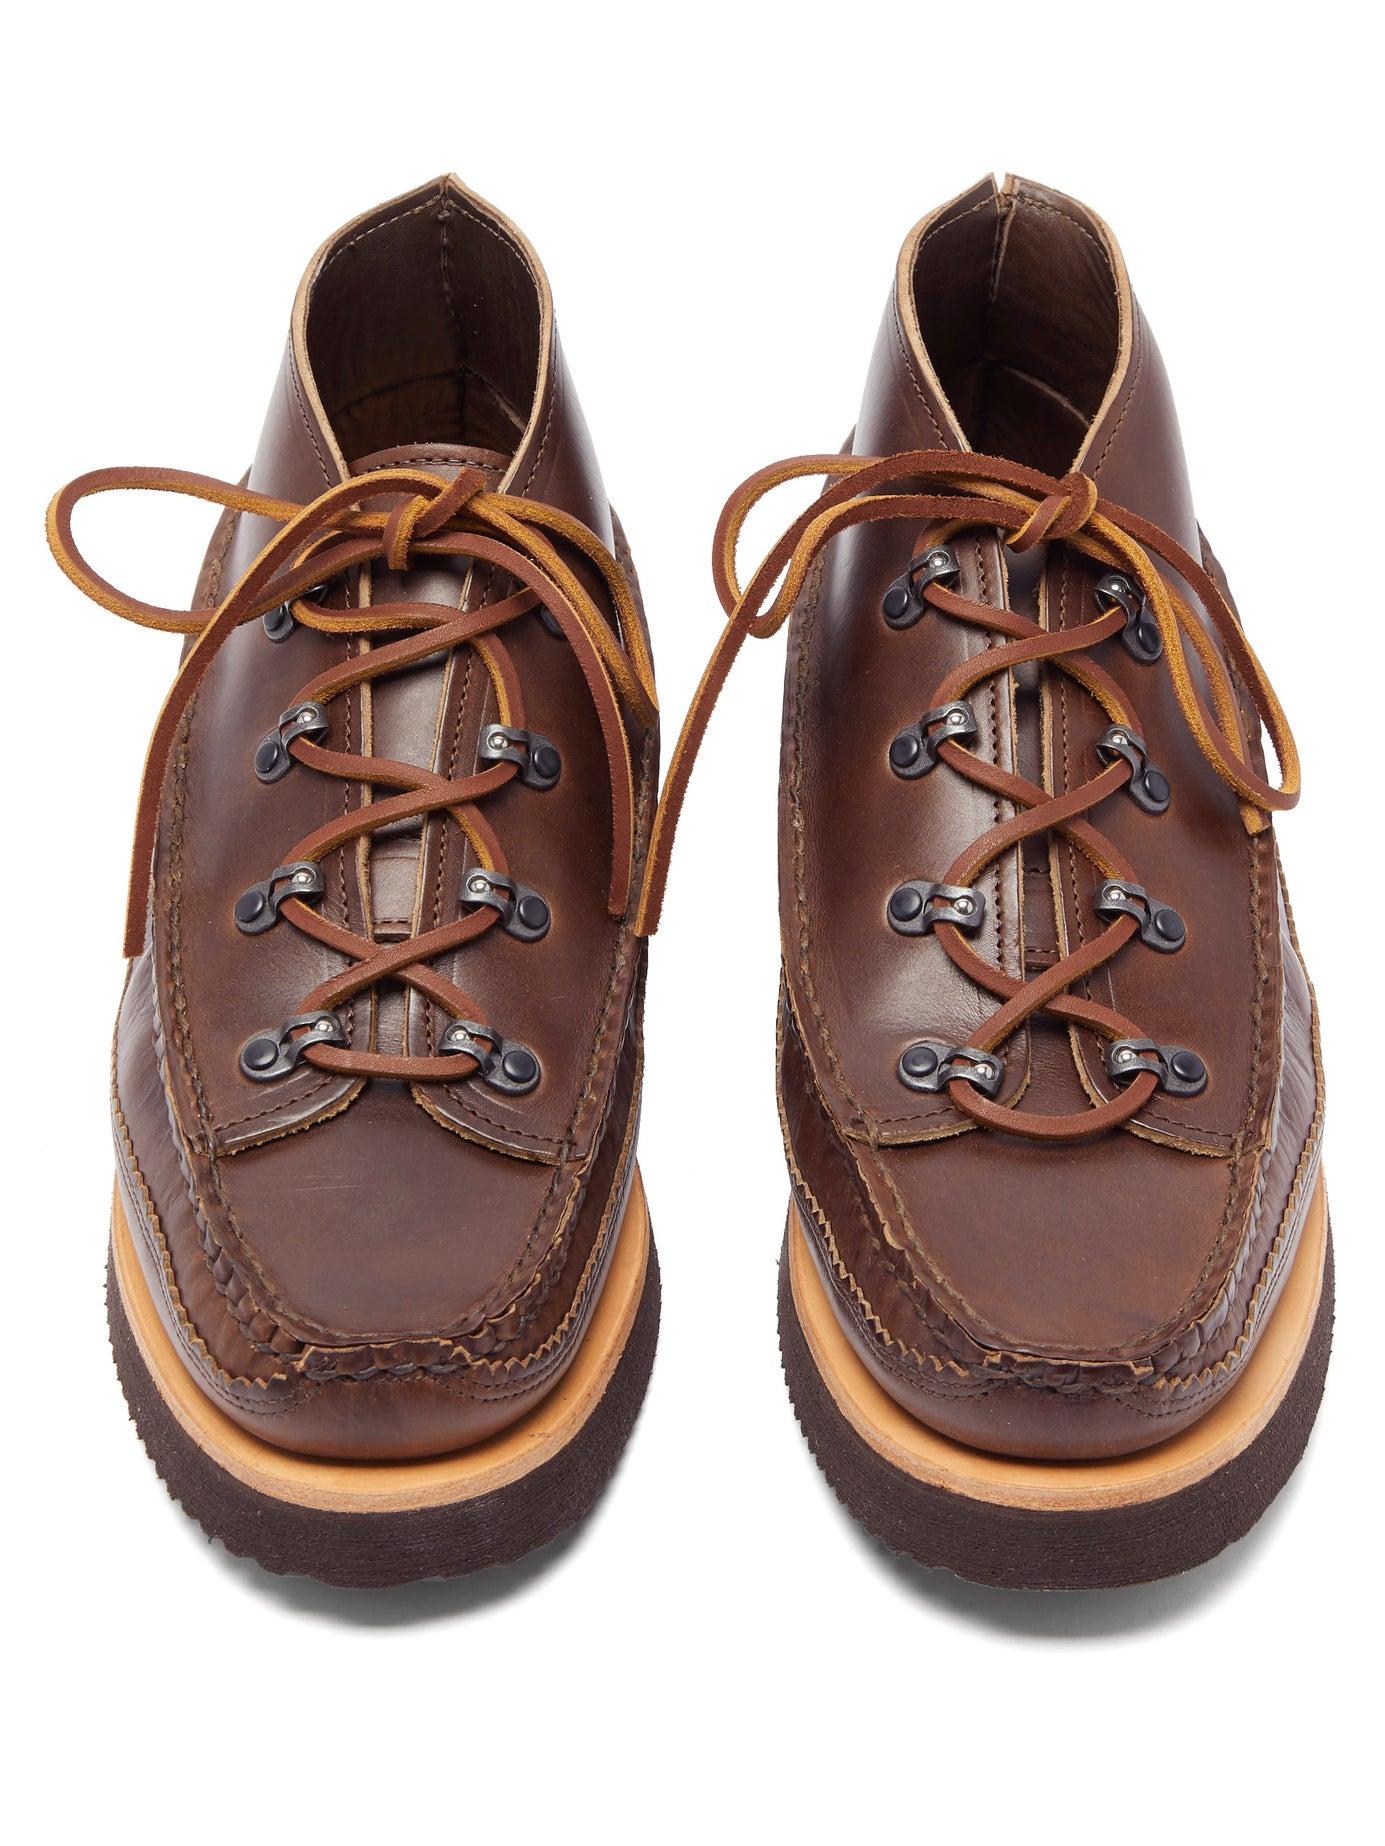 Yuketen All Handsewn Tokyo Chukka Leather Desert Boots in Brown for Men ...